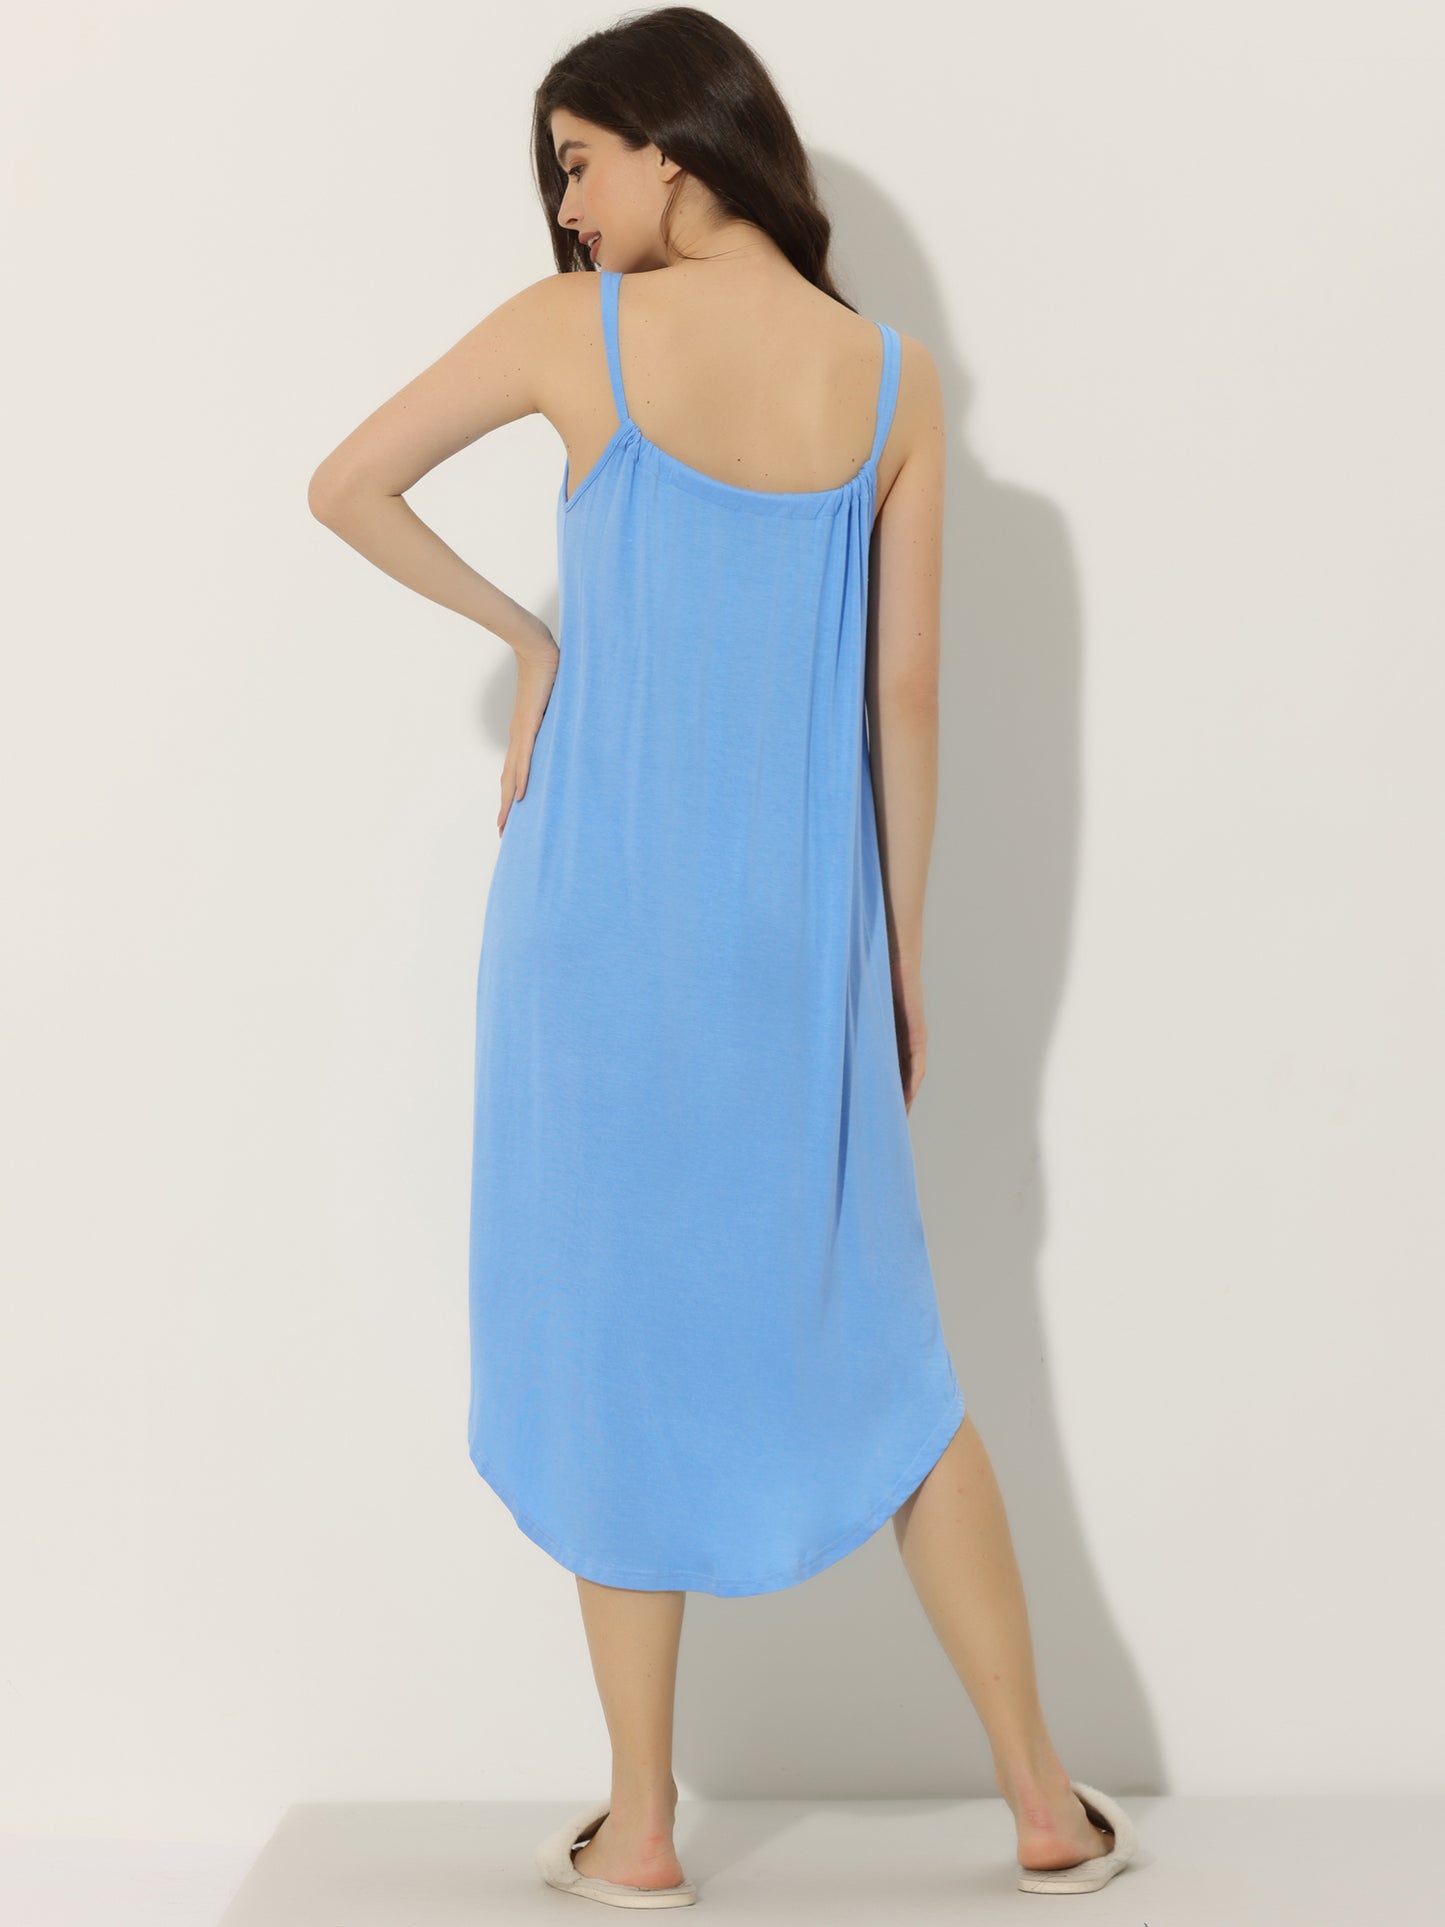 cheibear Pajama V Neck Nightdress Stretchy Lounge Cami Dress Blue